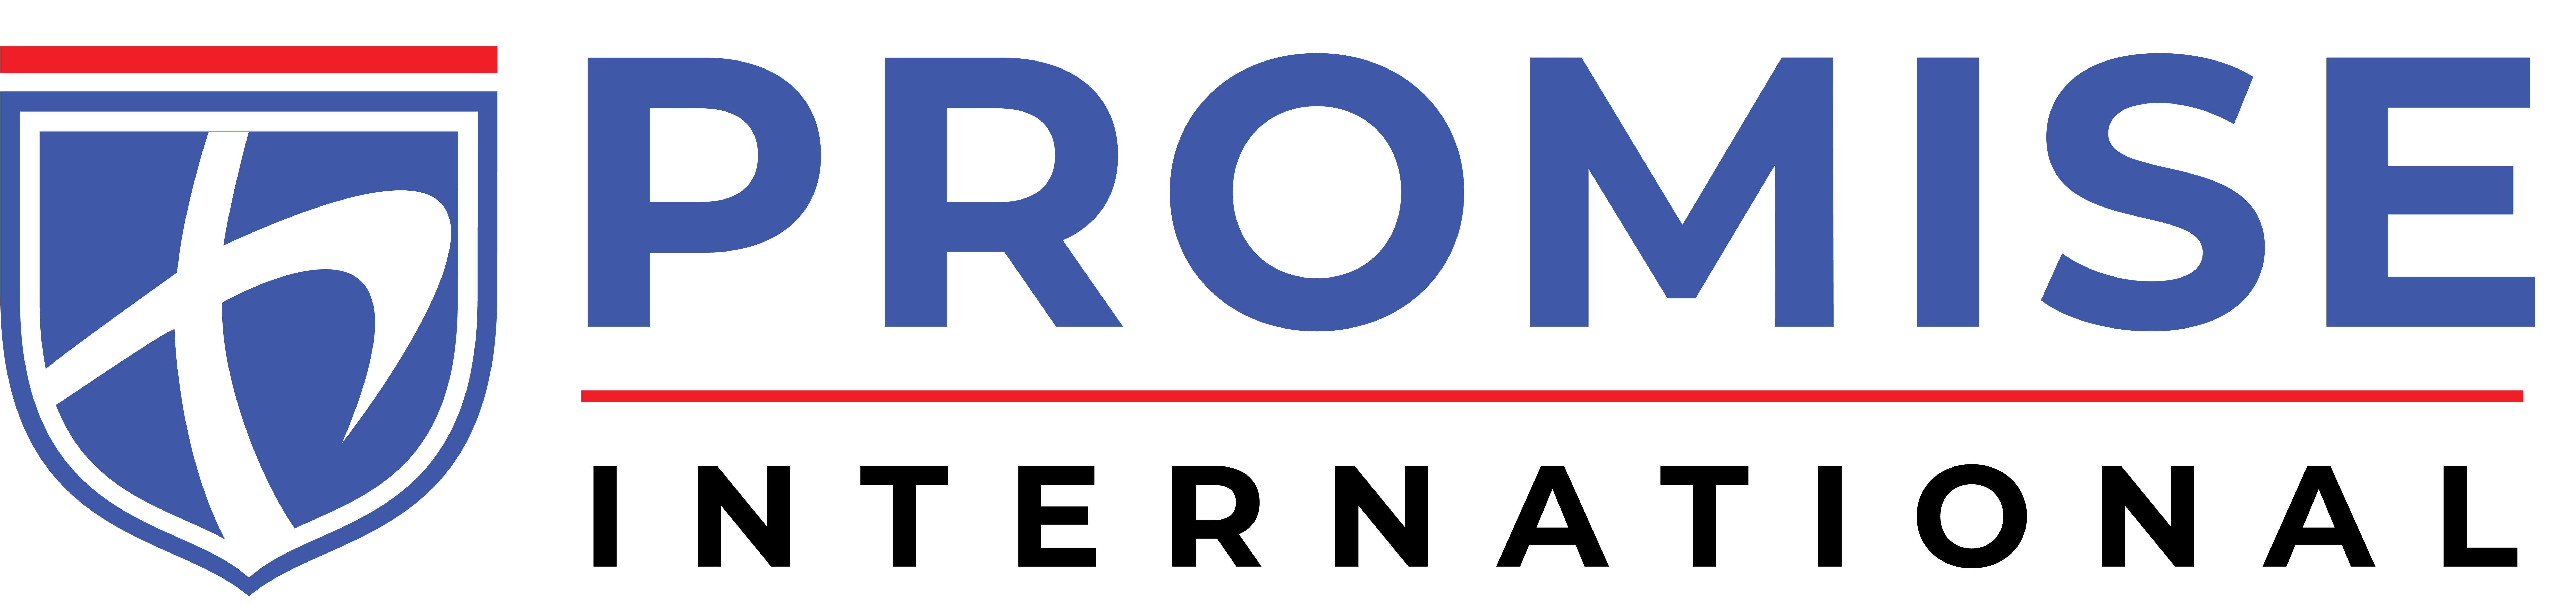 Promise_international_logo